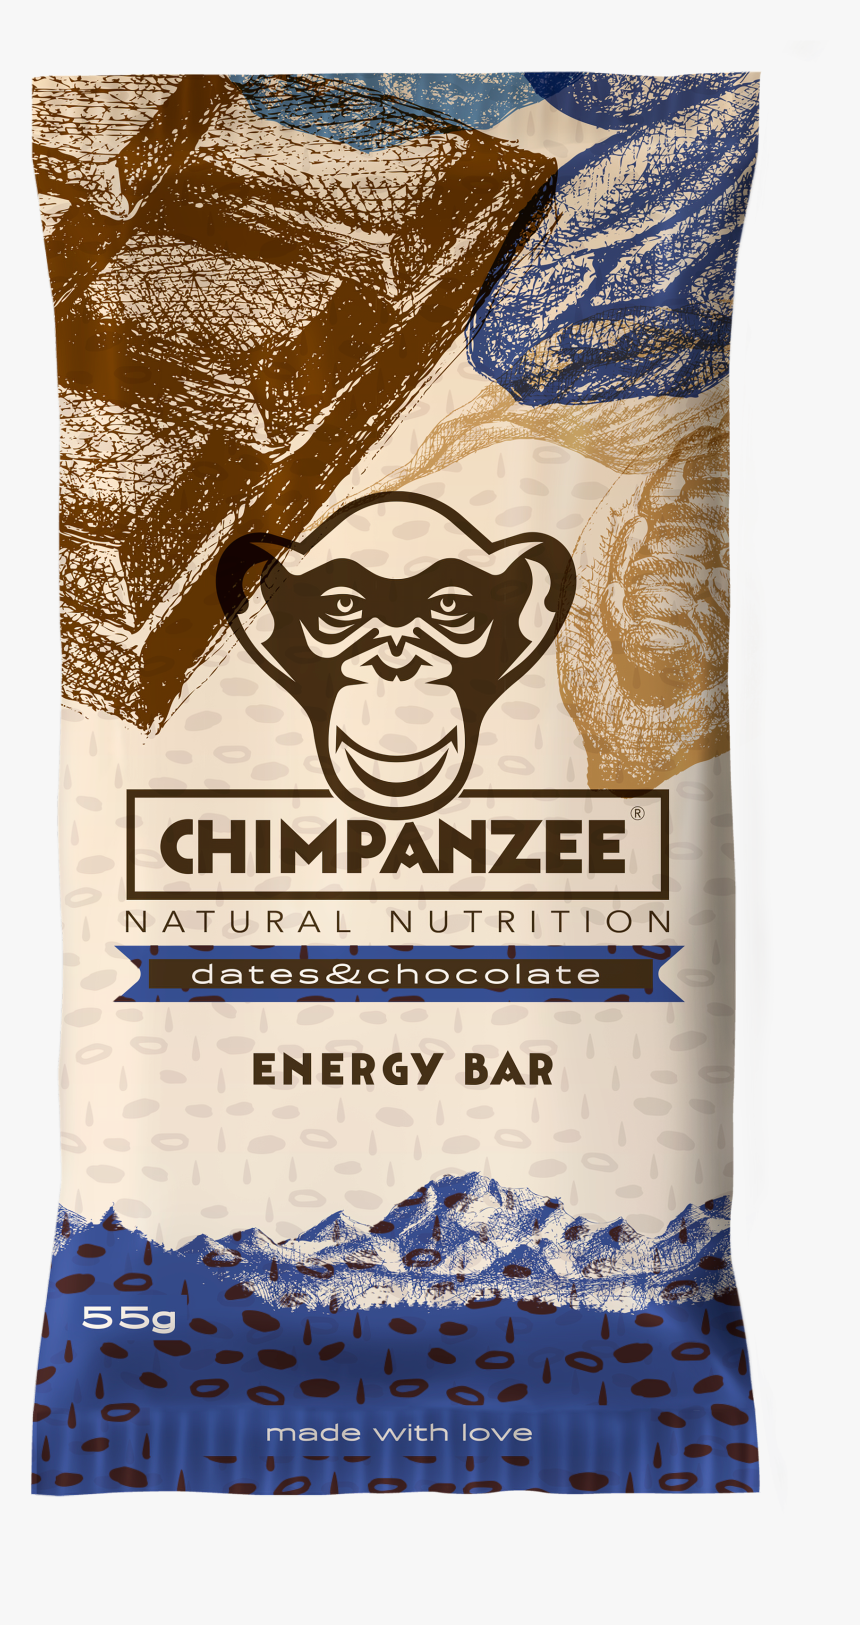 Energy Bar Chimpanzee, HD Png Download, Free Download